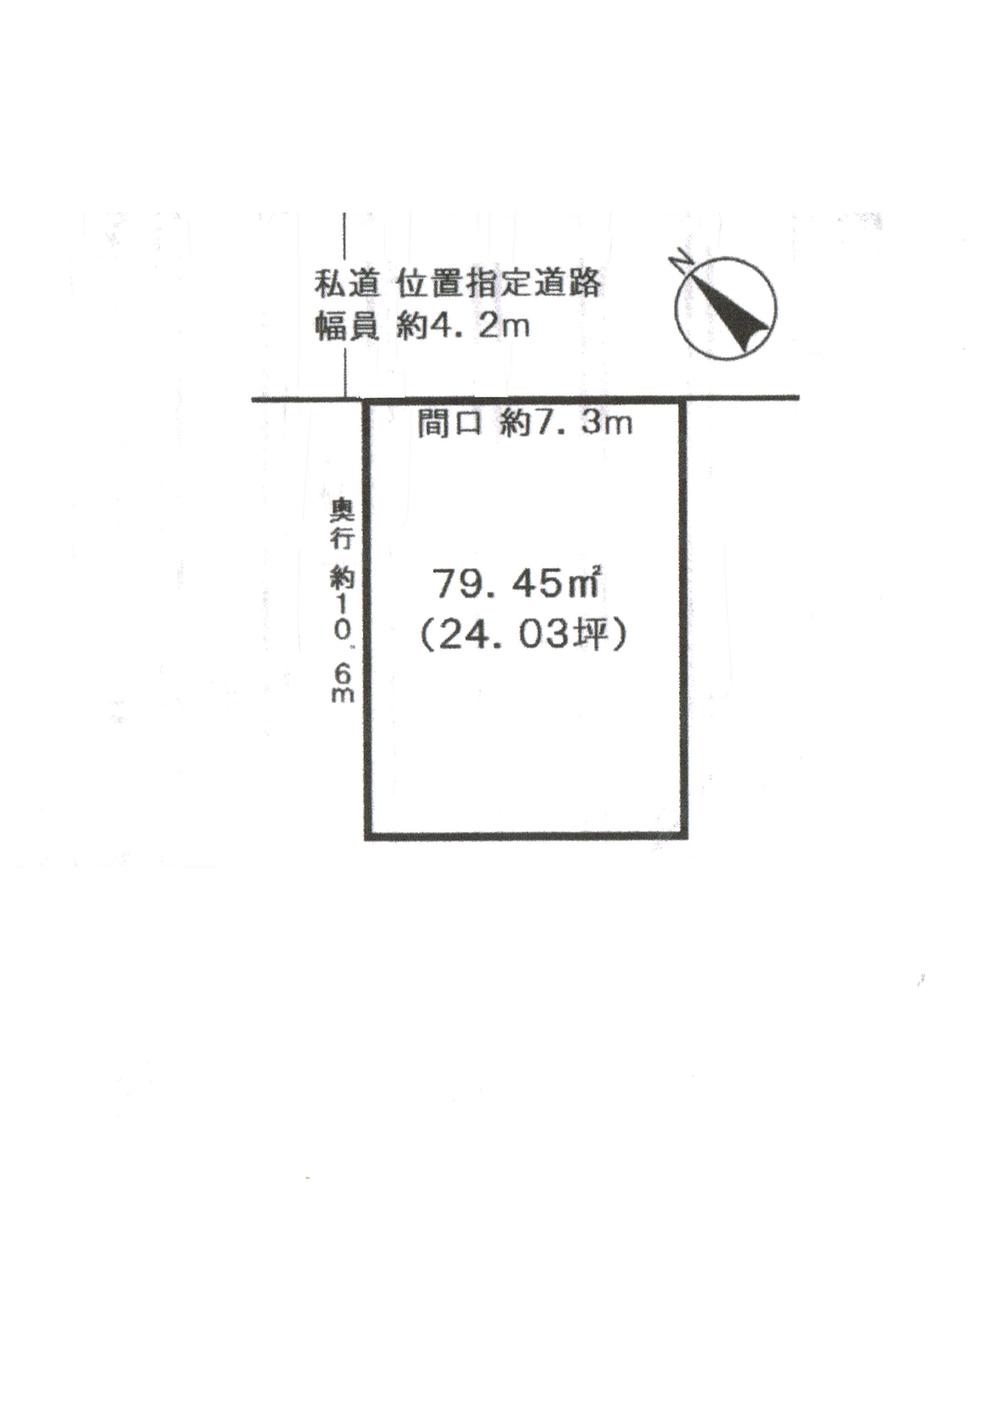 Compartment figure. Land price 11.8 million yen, Land area 79.45 sq m